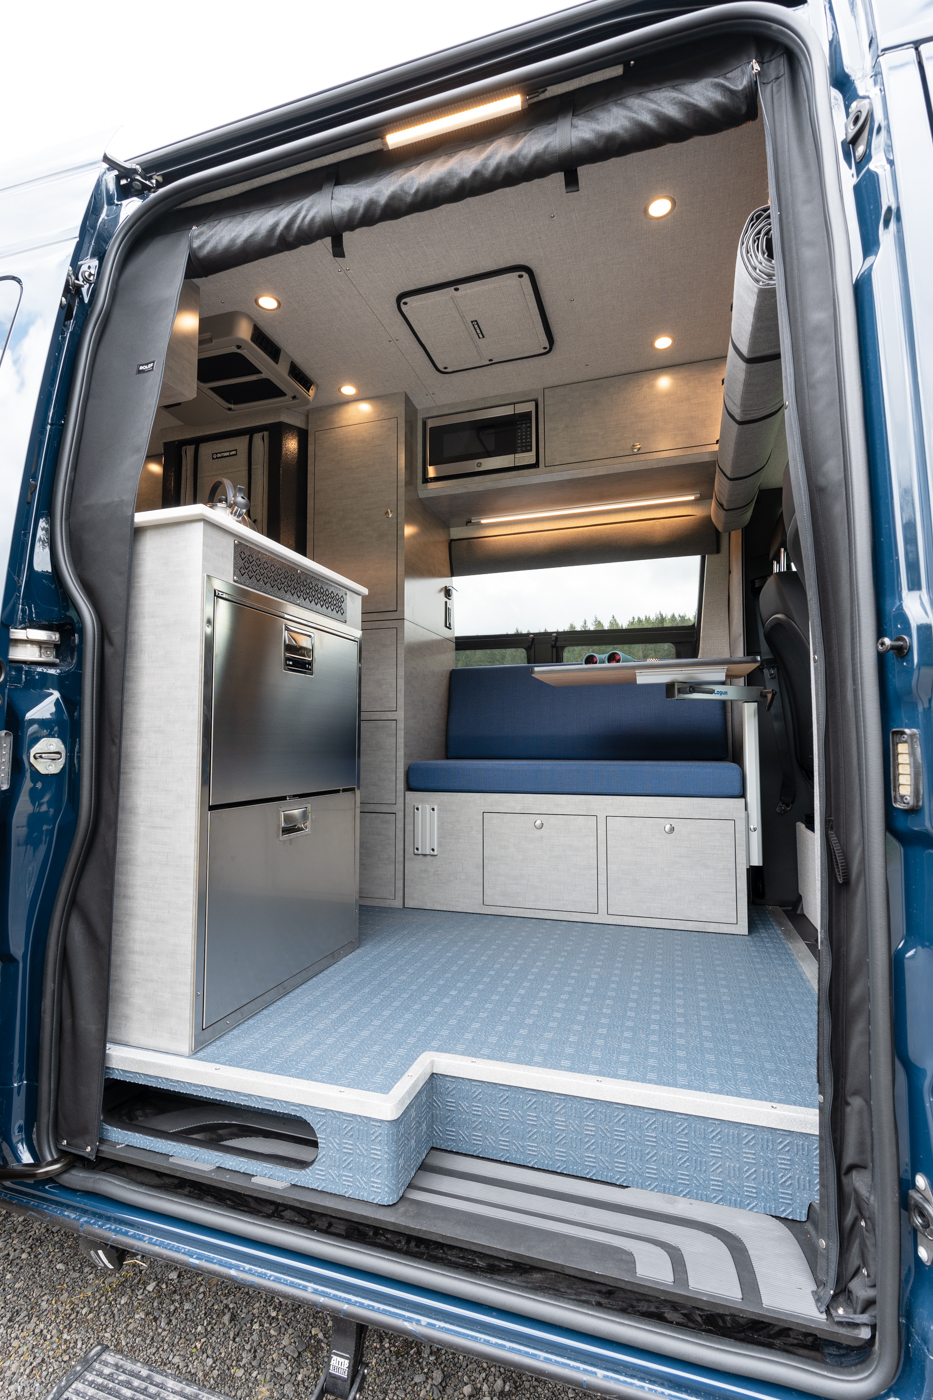 Custom off road sprinter van named blue morpho designed and built by Outside Van